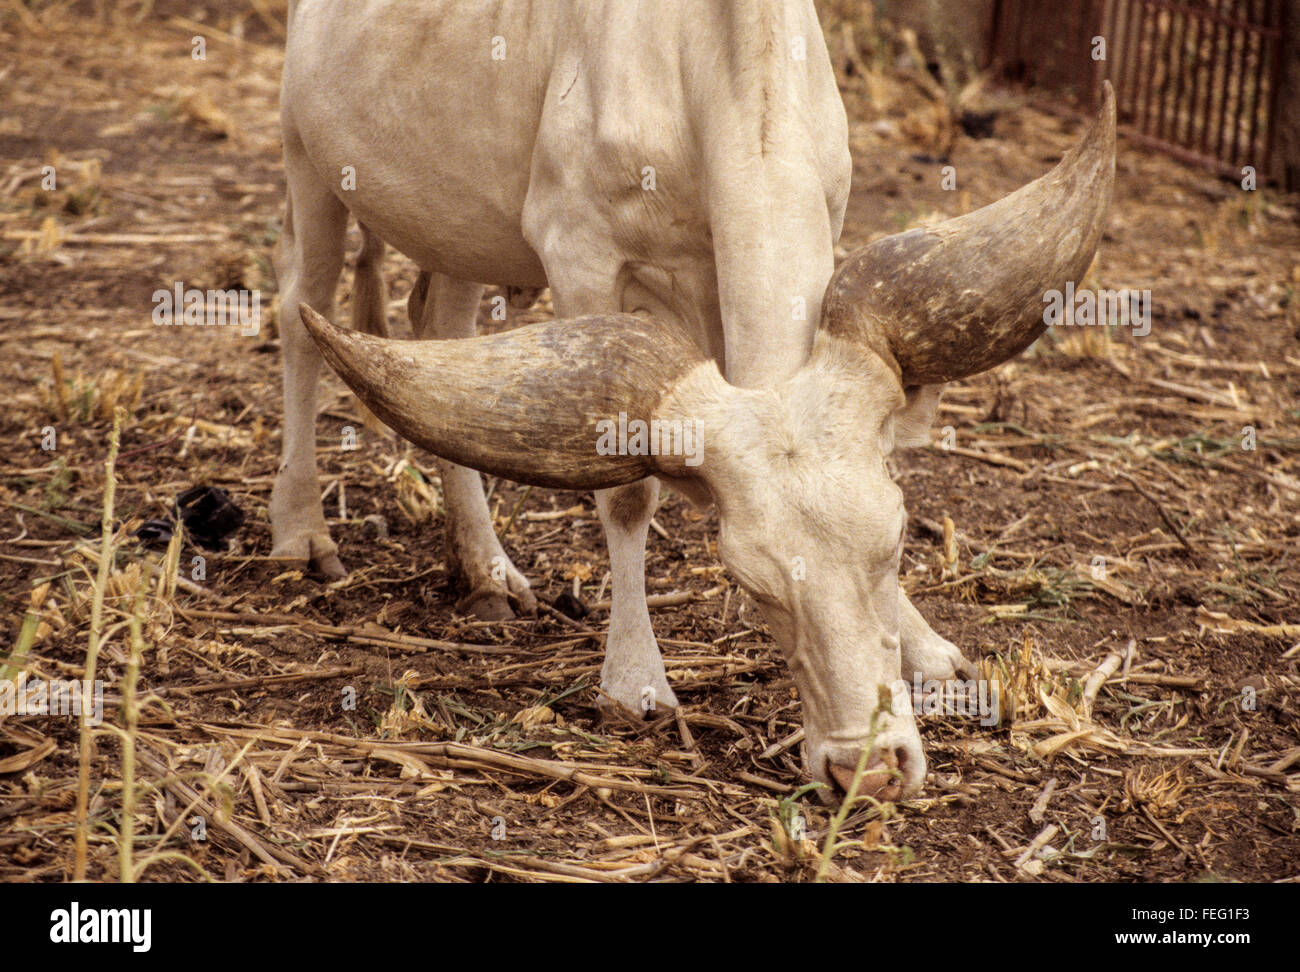 Niger, Niamey.  Lake Chad Cow, Kuri Breed, descended from Bos Taurus Longifrons. Stock Photo